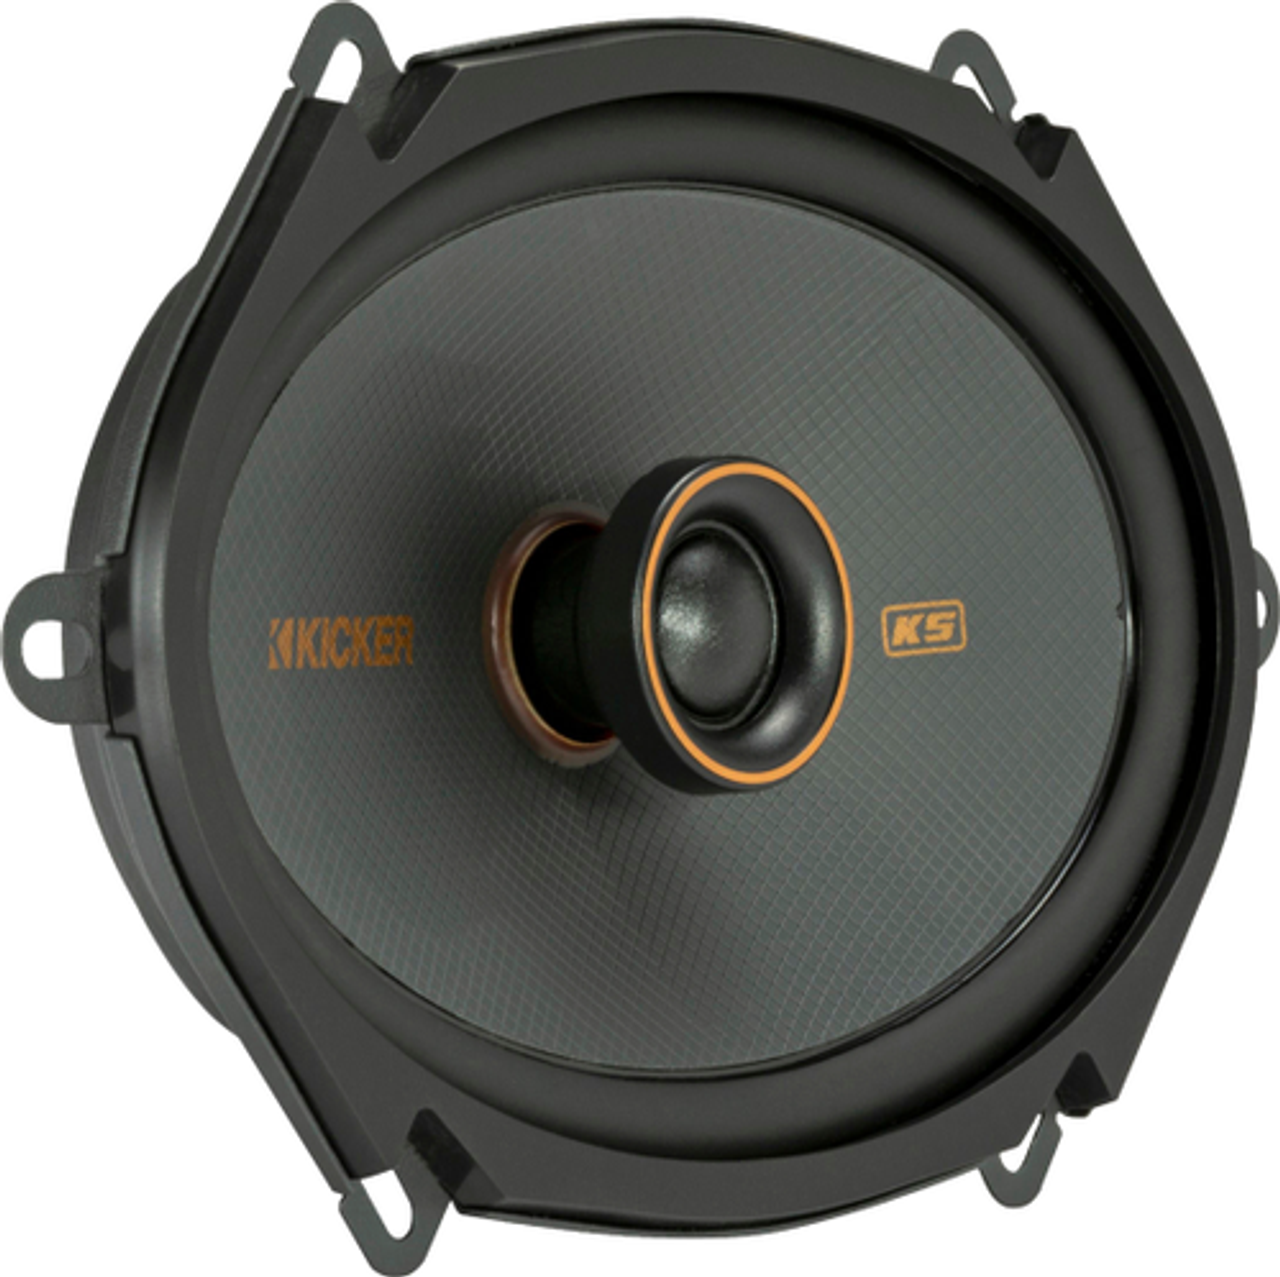 KICKER - KS Series 6" x 8" 2-Way Car Speakers with Polypropylene Cones (Pair) - Black